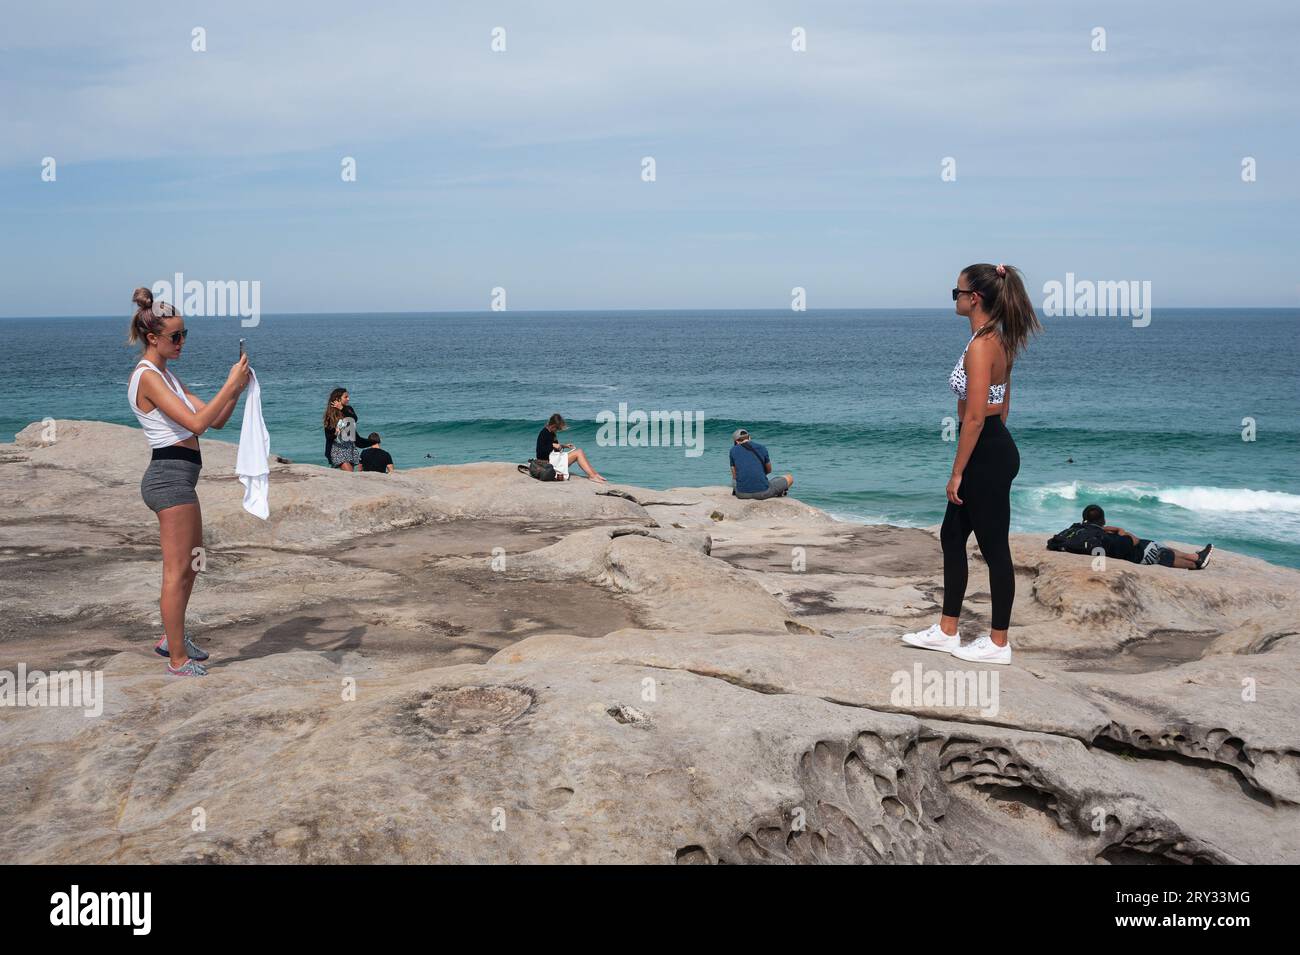 27.09.2019, Sydney, New South Wales, Australia - Young woman photographs her friend on the cliffs at Tamarama Point along Bondi to Bronte Coastal Walk. Stock Photo